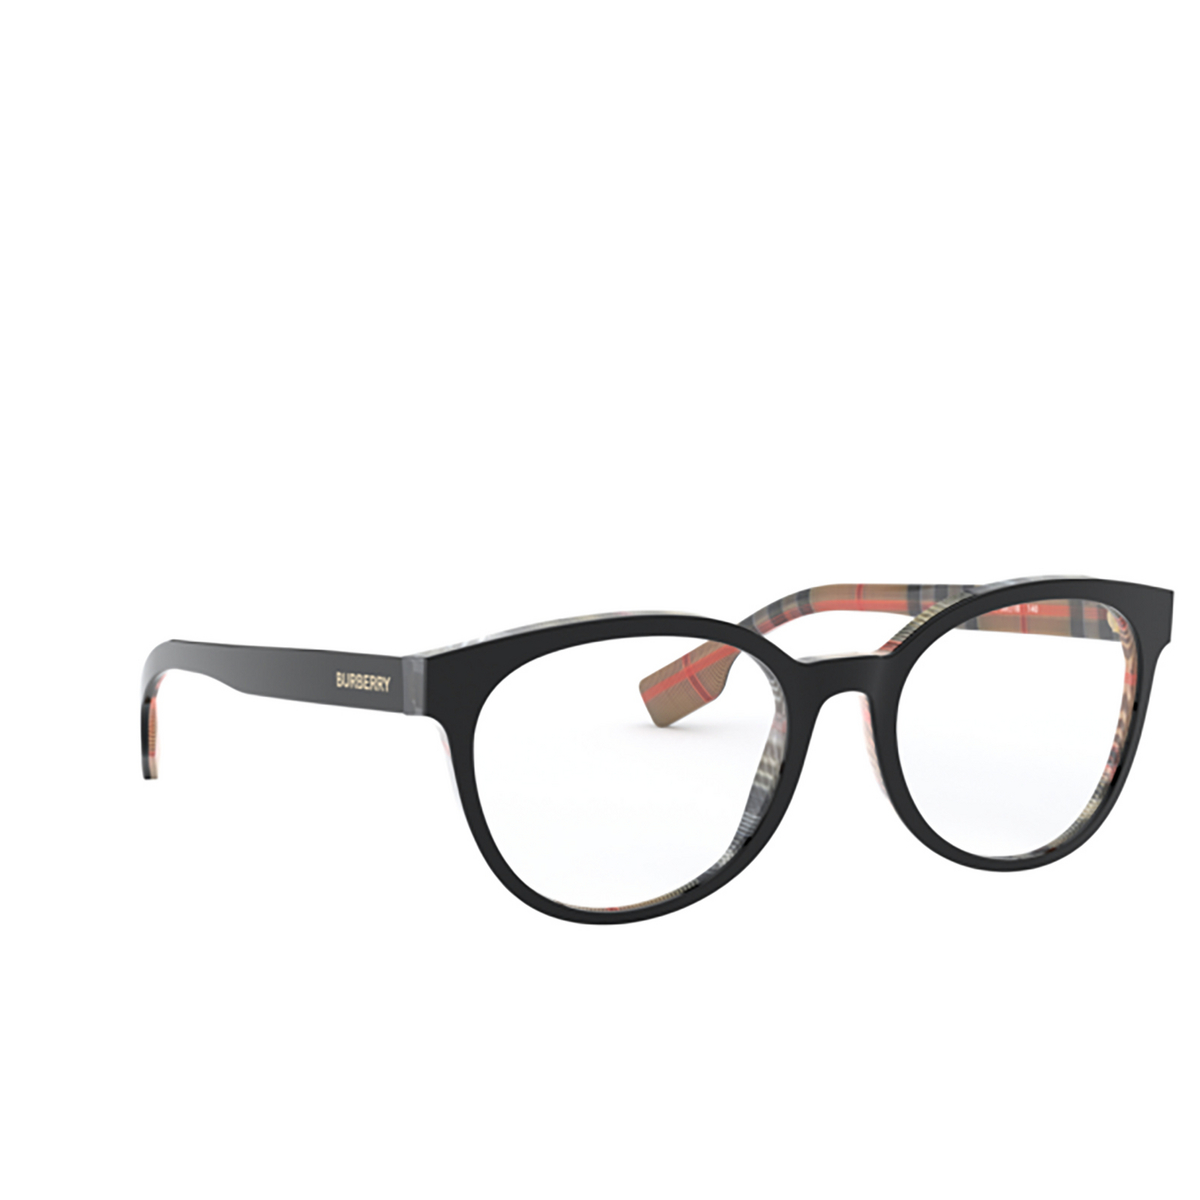 Burberry SLOANE Eyeglasses 3838 Top Black On Vintage Check - three-quarters view